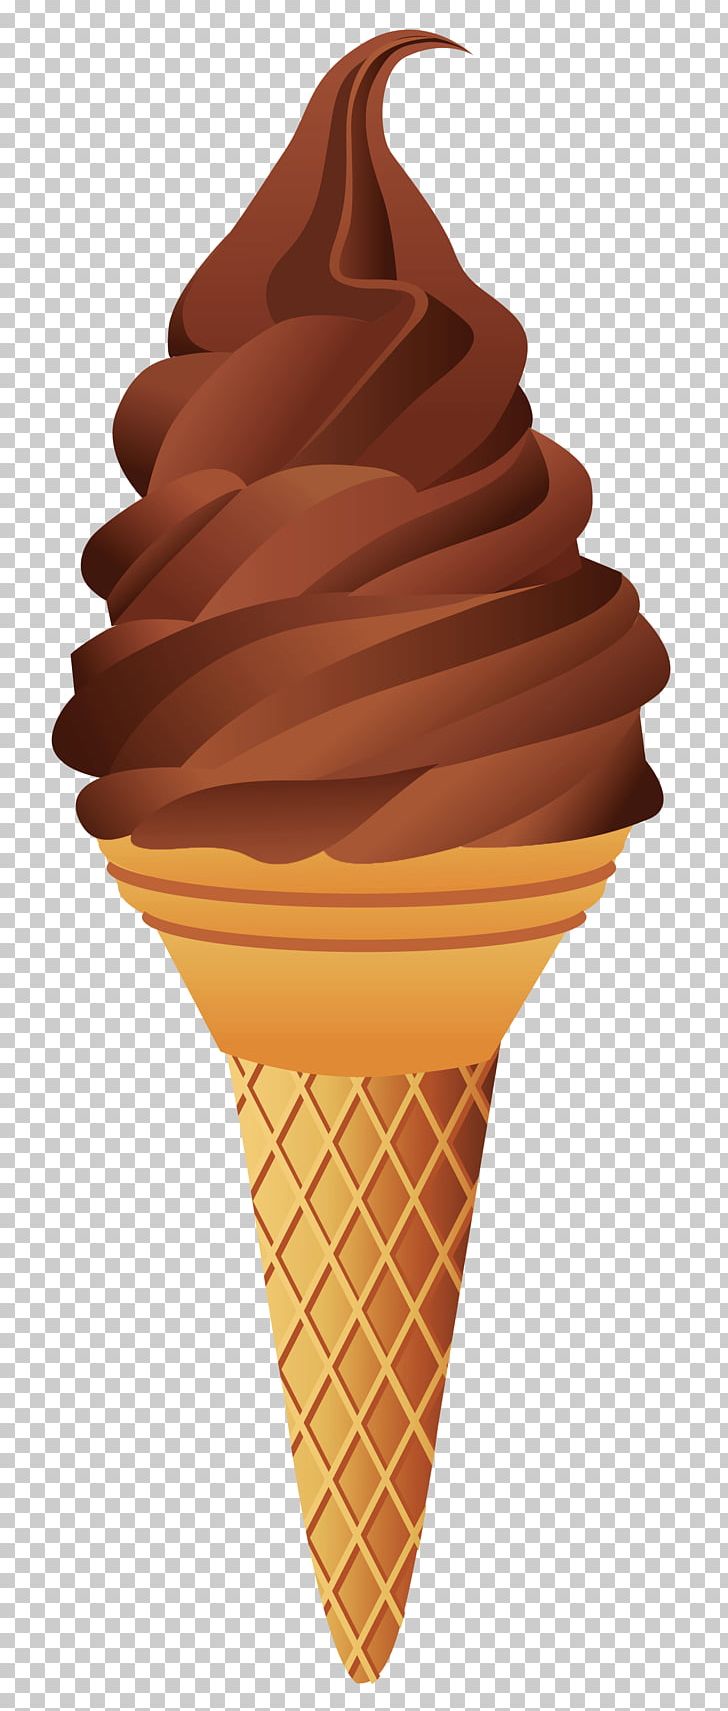 Sundae clipart soft serve. Chocolate ice cream cone